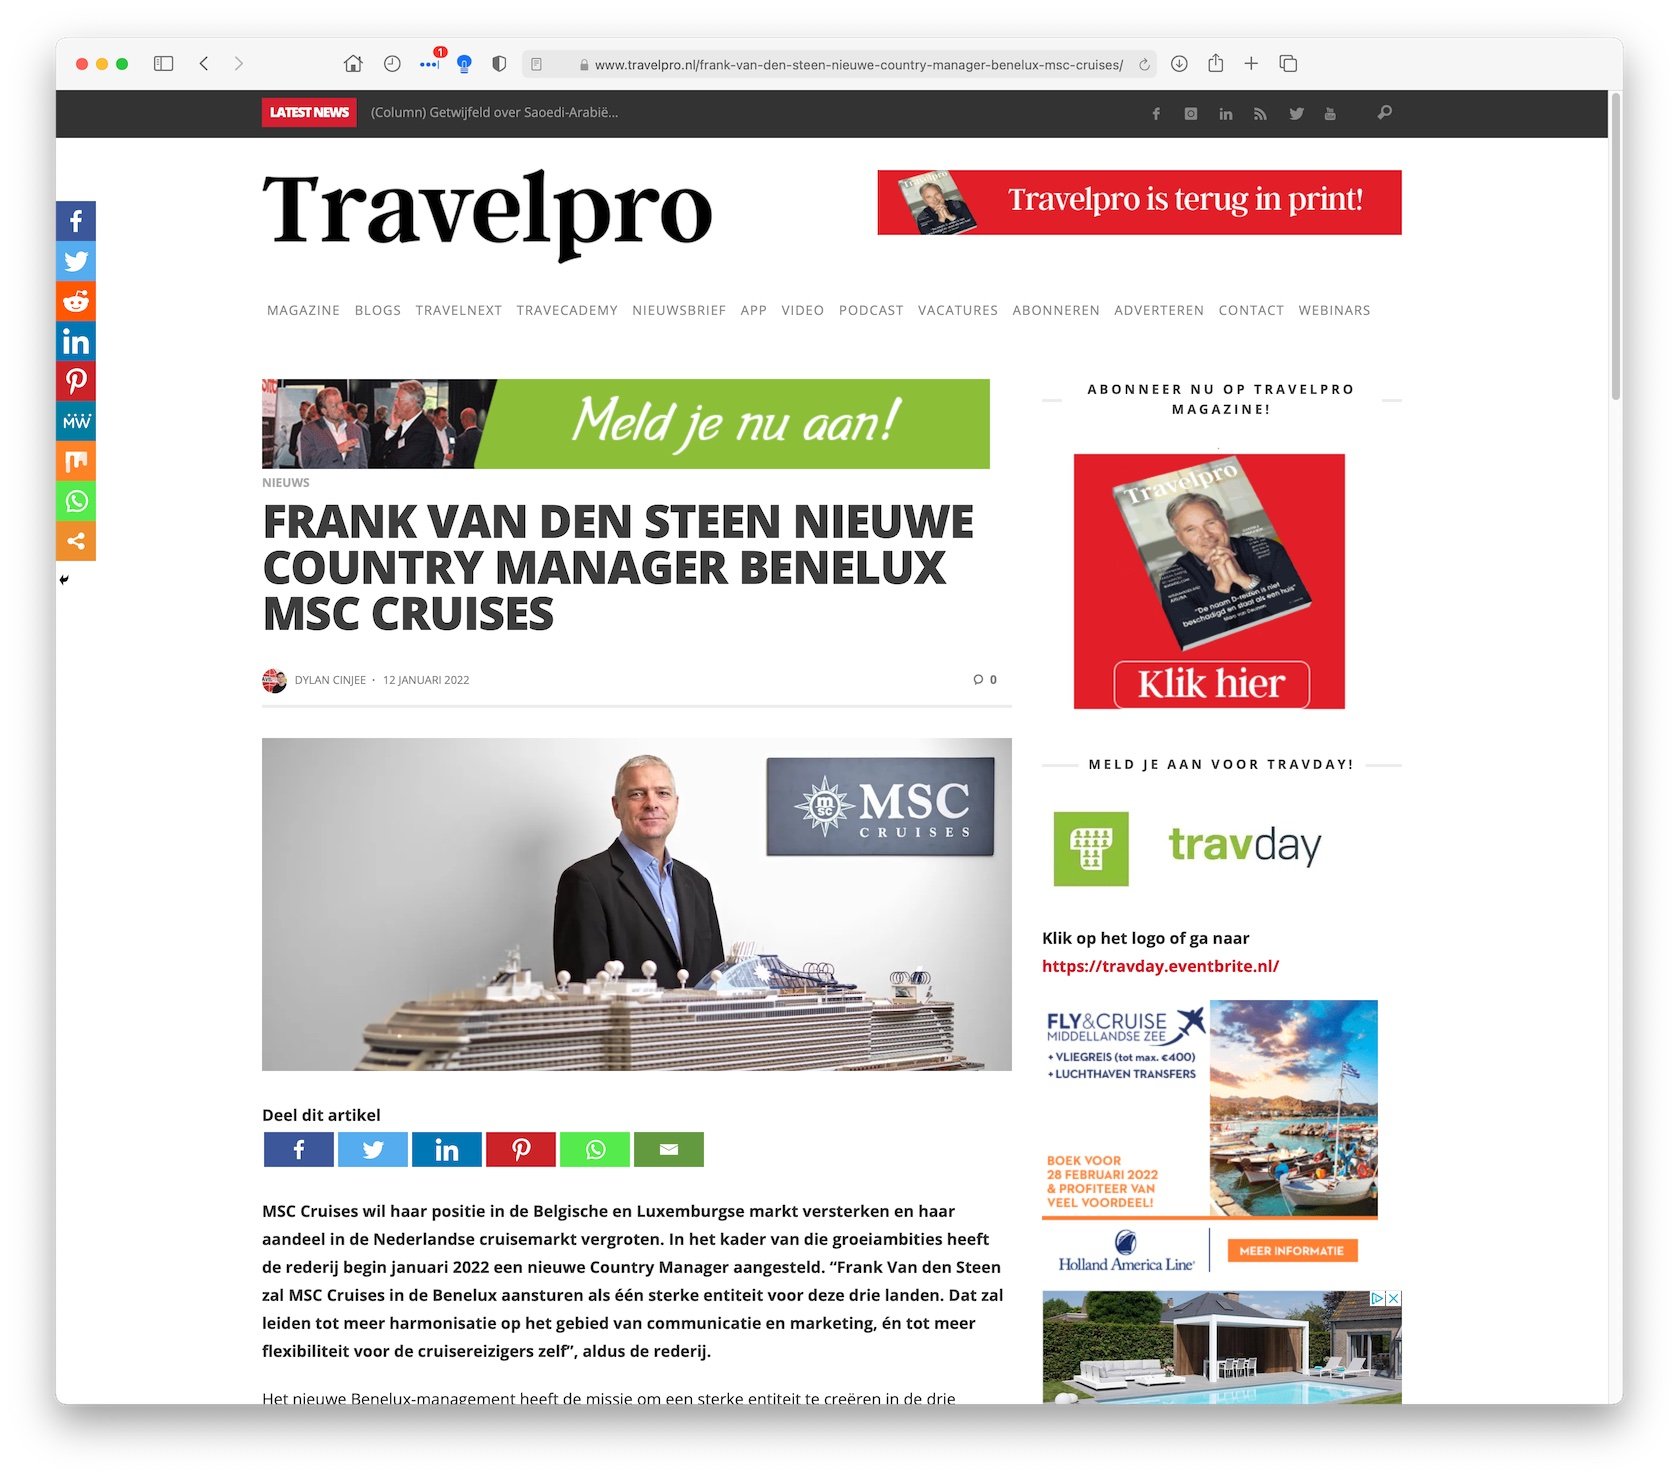 Frank Van den Steen, MSC Cruises, on Travelpro.nl